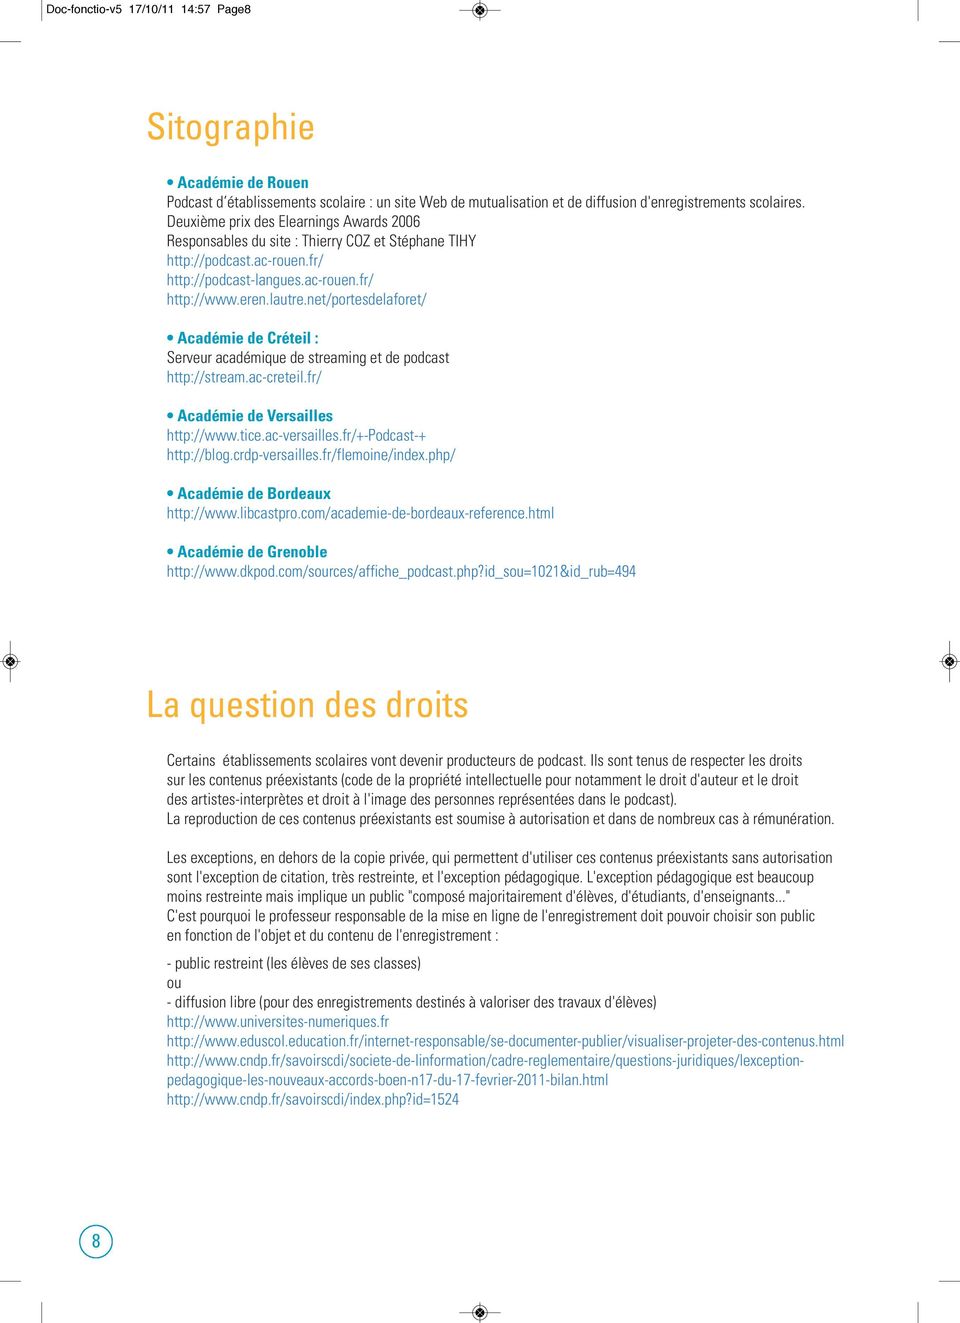 net/portesdelaforet/ Académie de Créteil : Serveur académique de streaming et de podcast http://stream.ac-creteil.fr/ Académie de Versailles http://www.tice.ac-versailles.fr/+-podcast-+ http://blog.